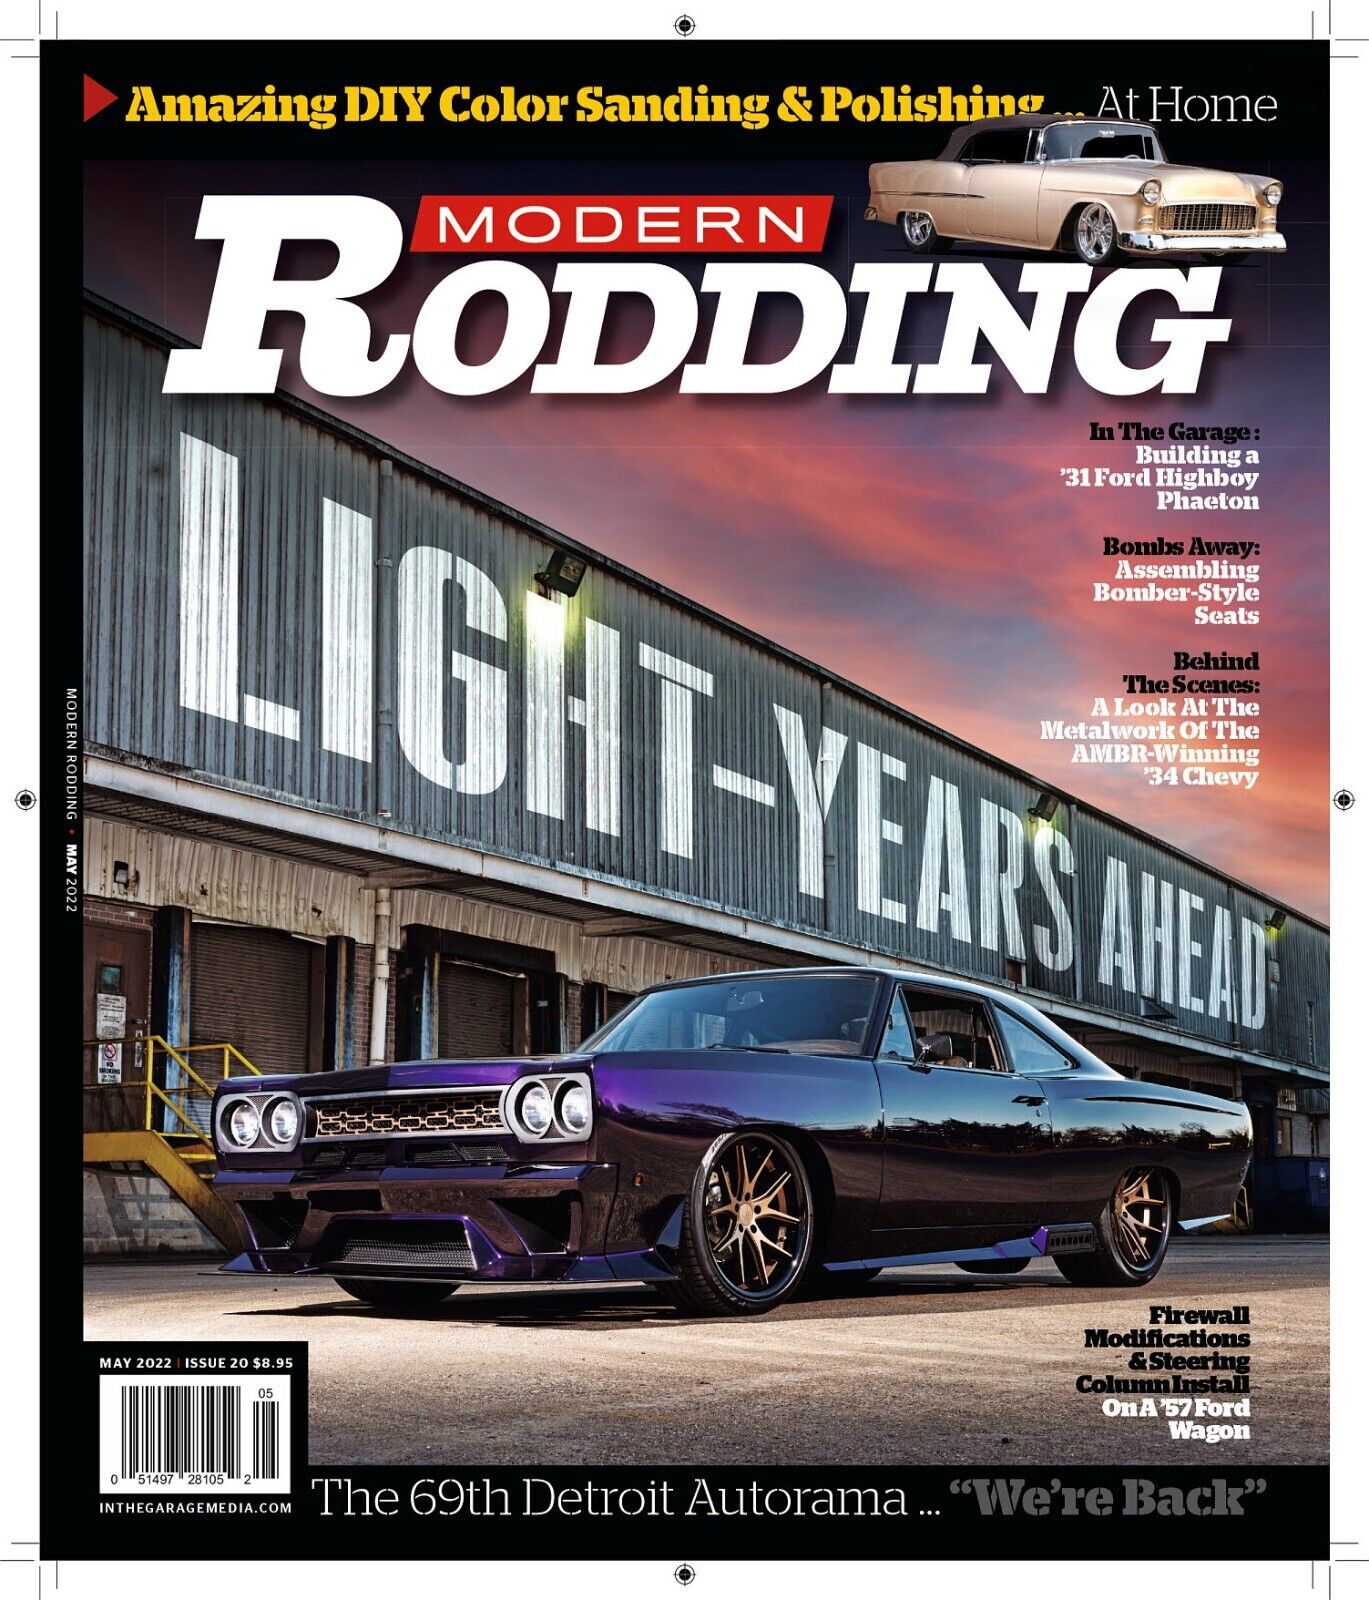 Modern Rodding Magazine Light-Years Ahead Issue #20 May 2022 - New